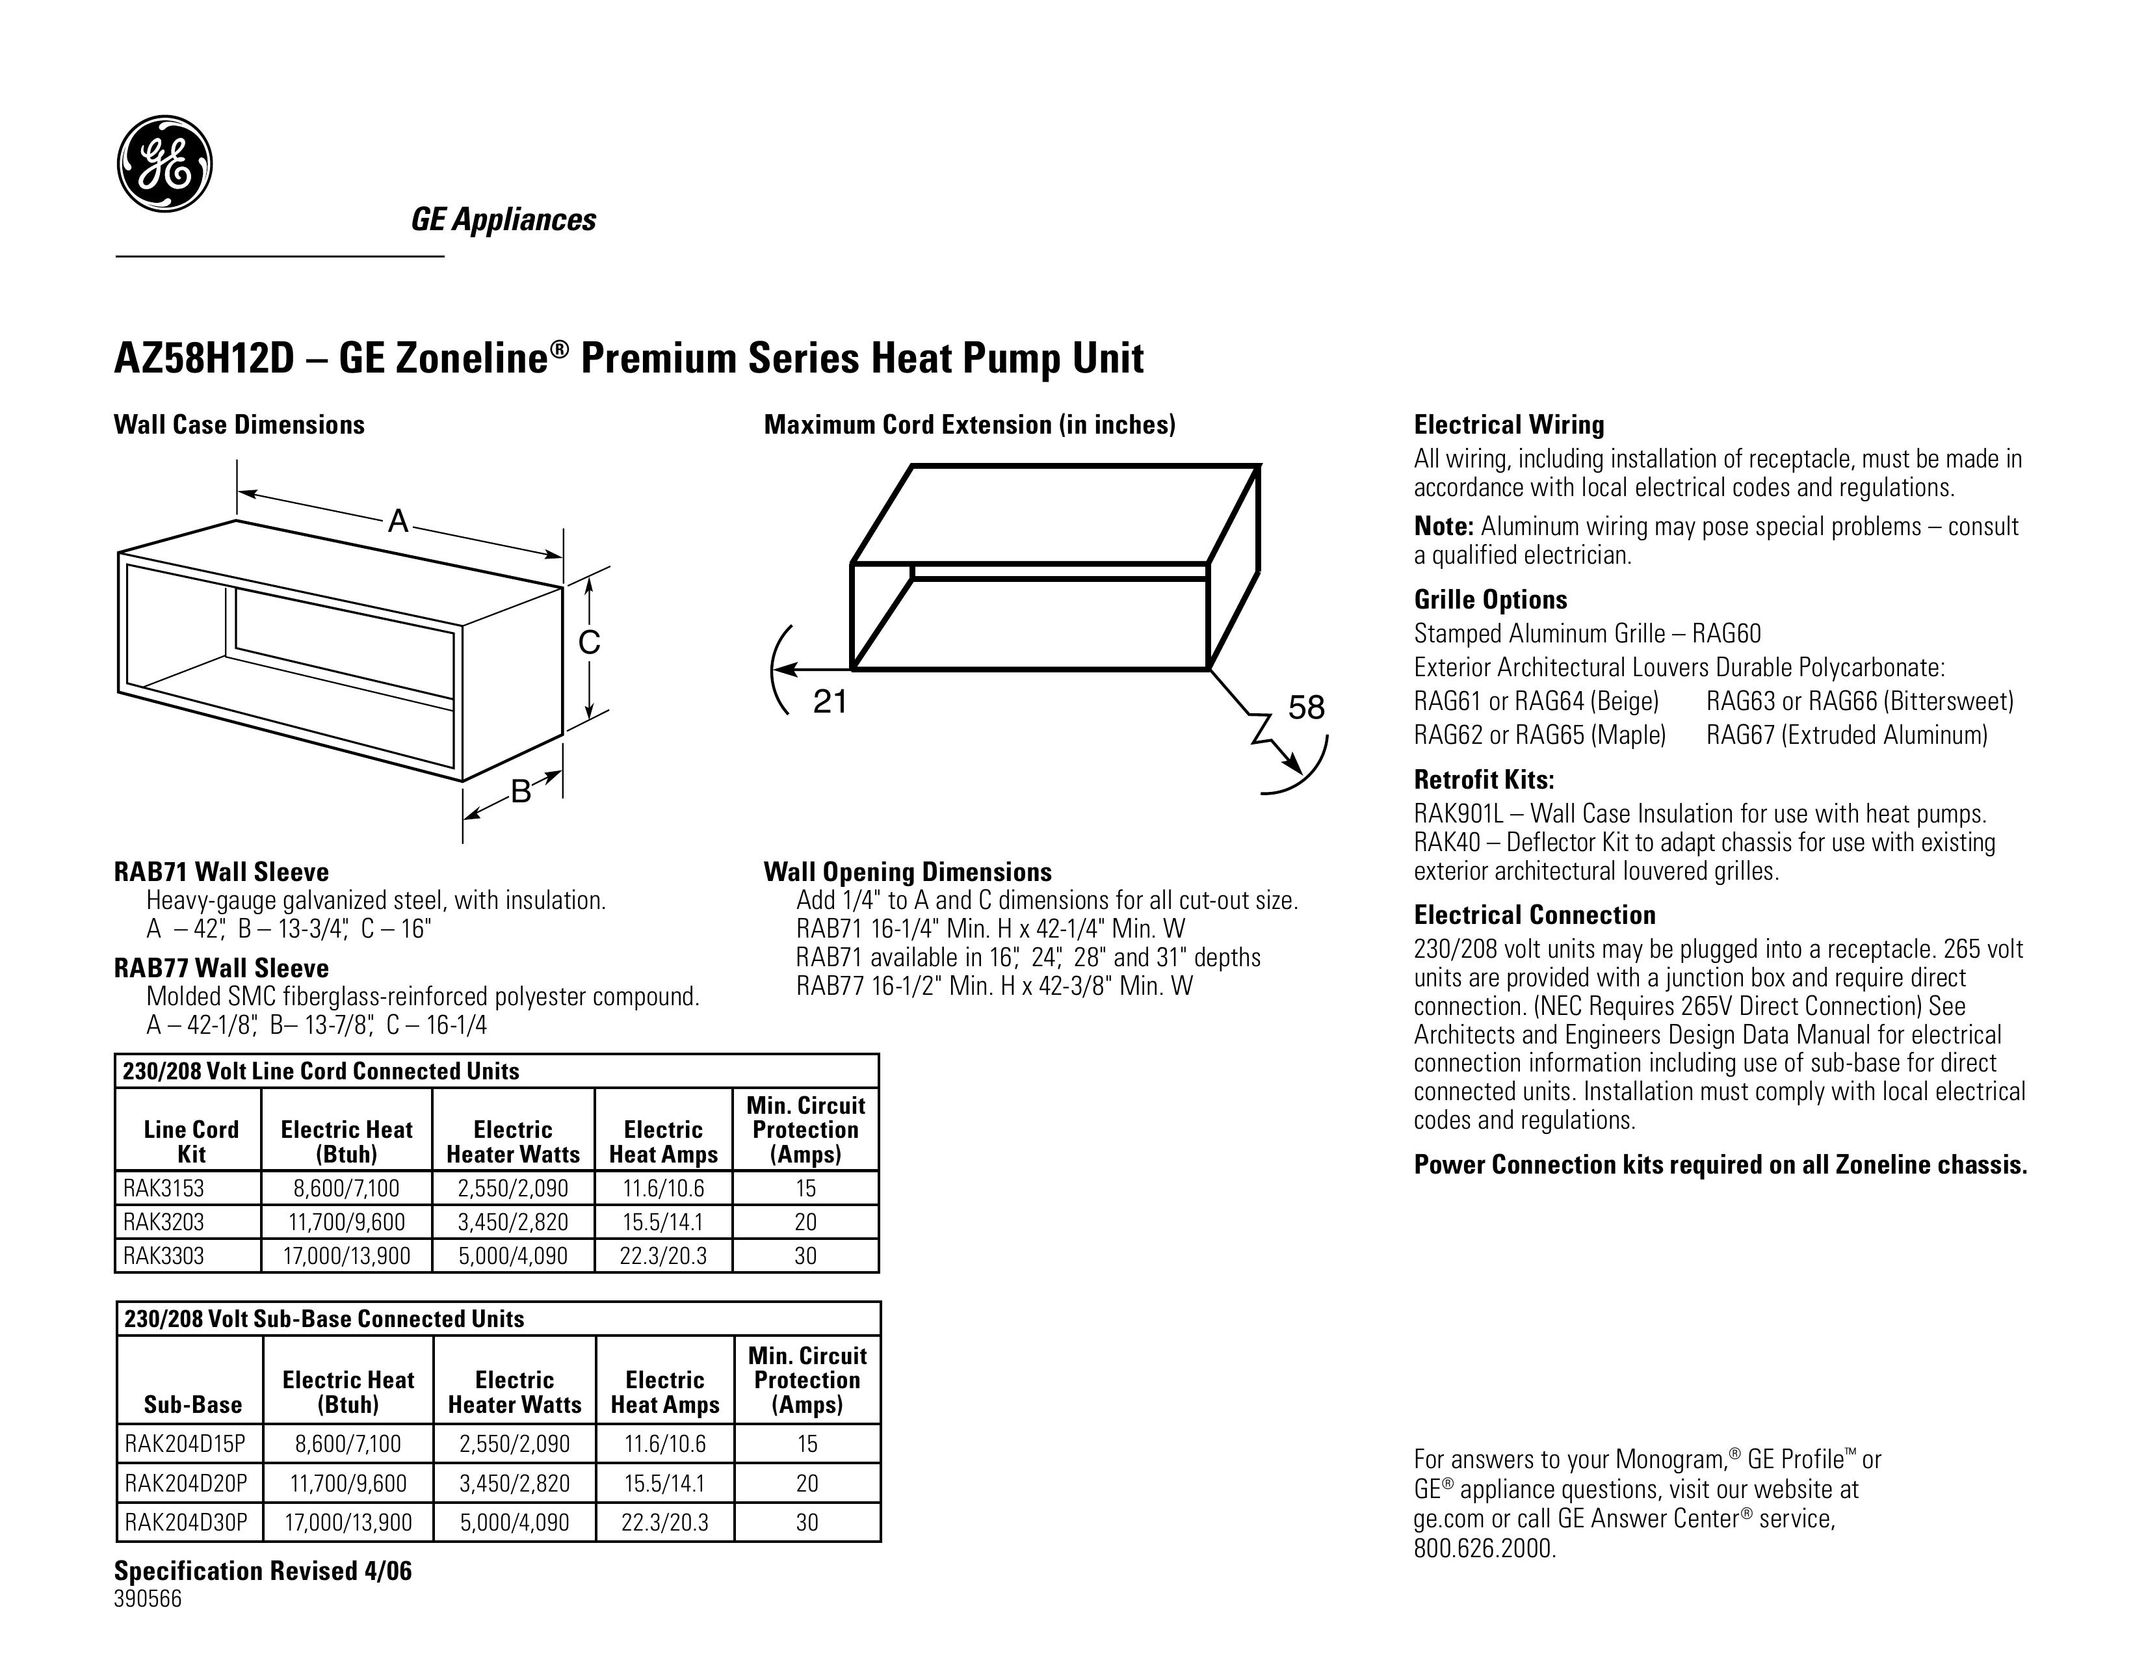 GE AZ58H12DAD Heat Pump User Manual